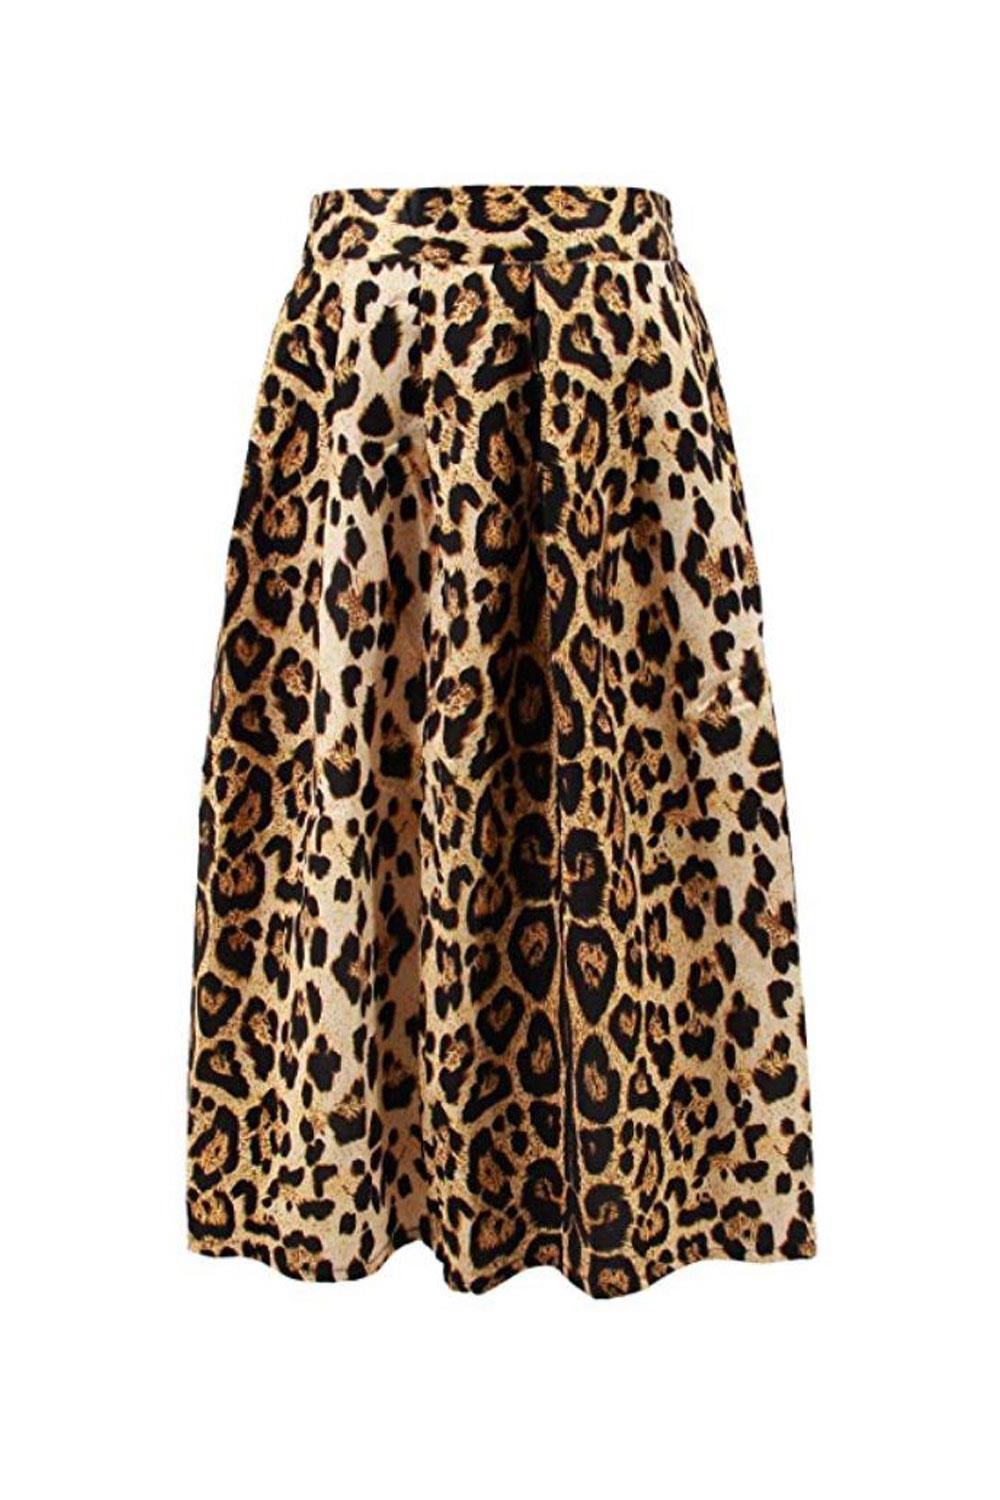 falda leopardo amazon Hoohu, 20€ aprox.